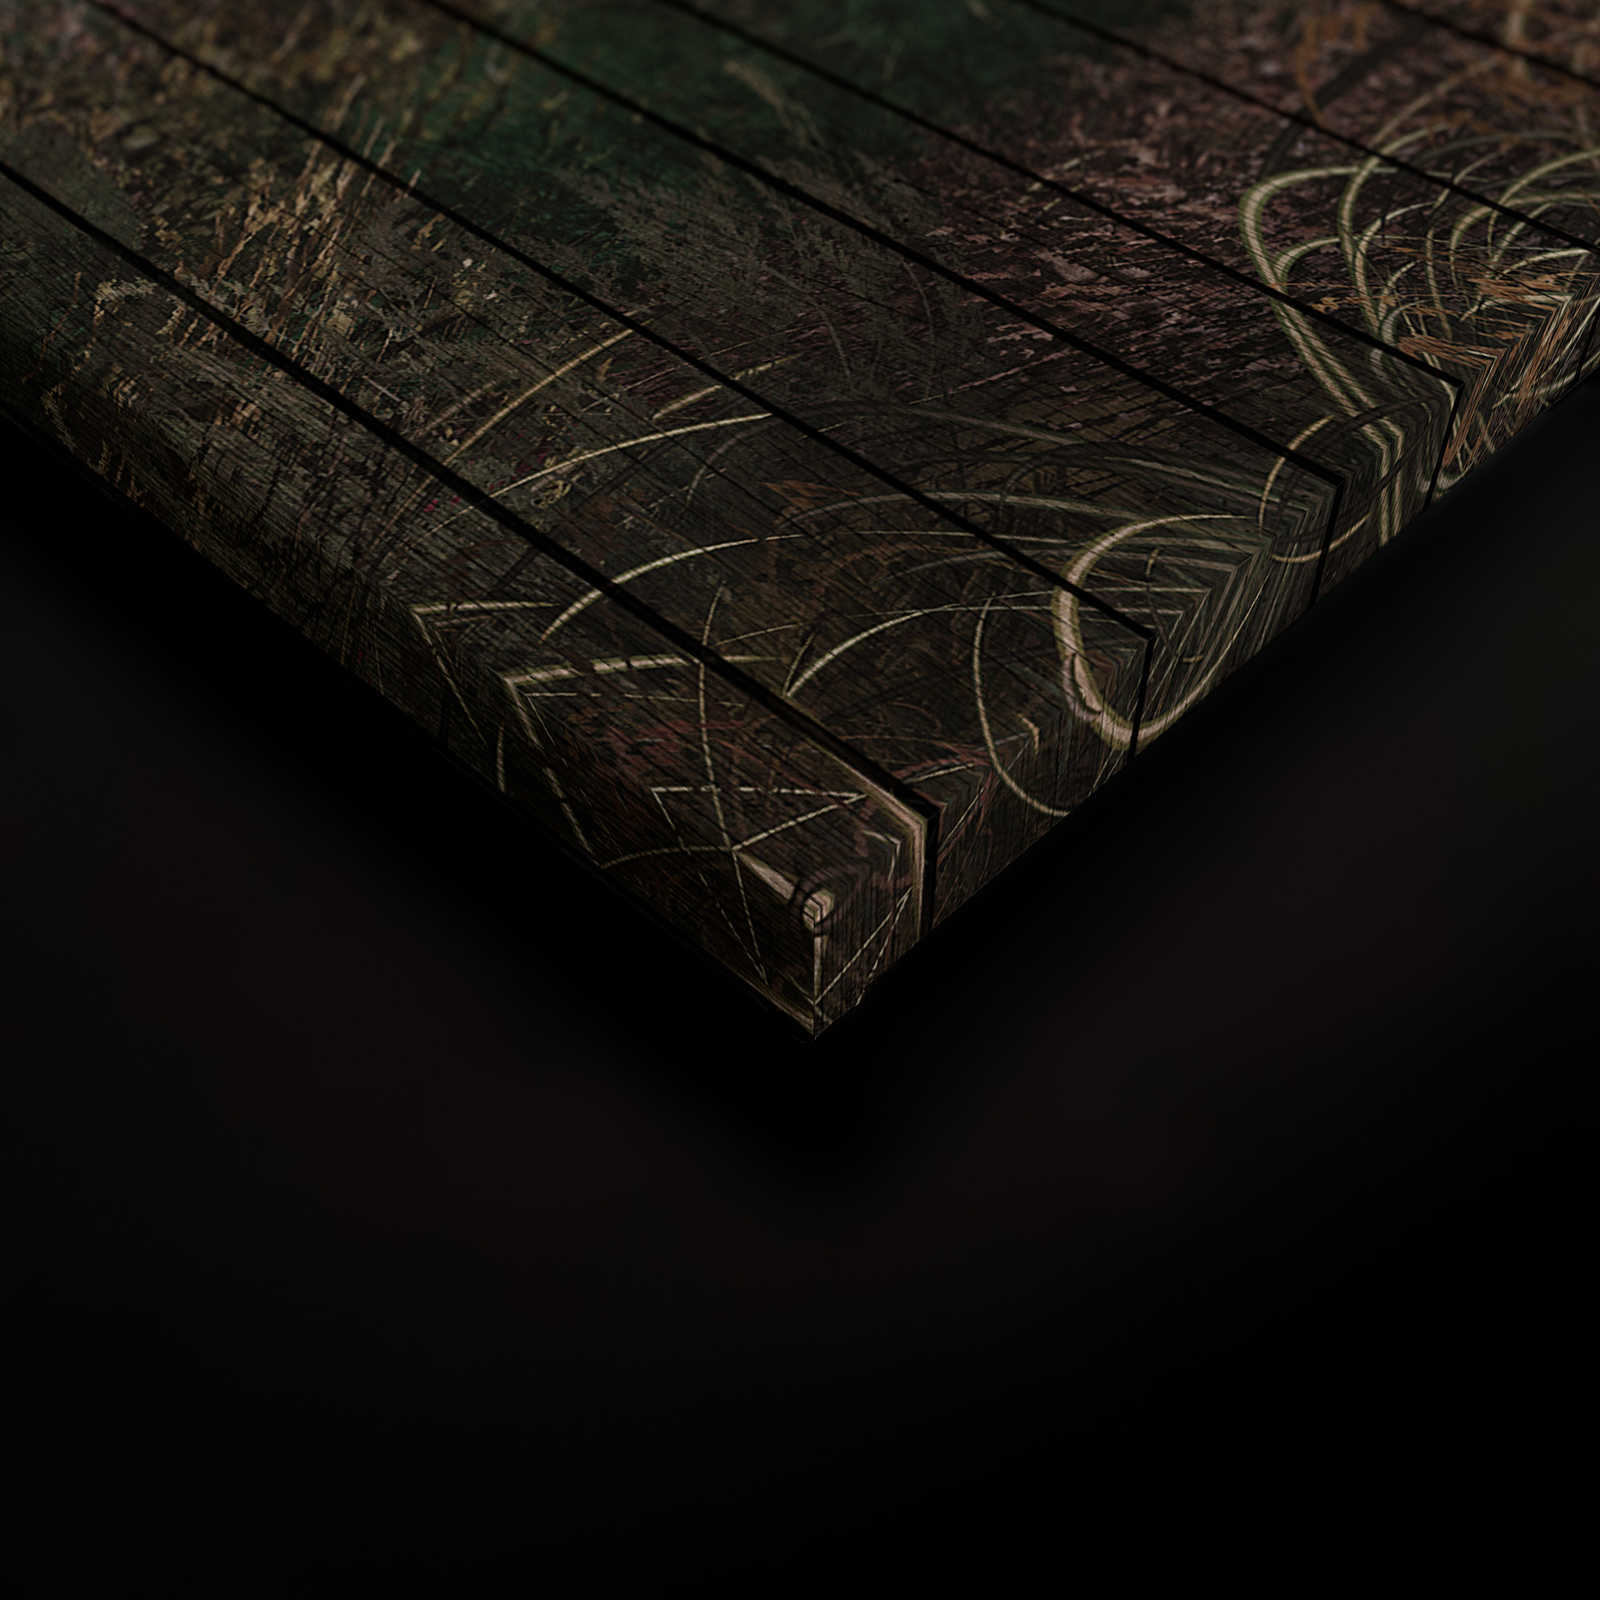             Fantasy 3 - Einhorn Leinwandbild mit Holzbrettoptik – 0,90 m x 0,60 m
        